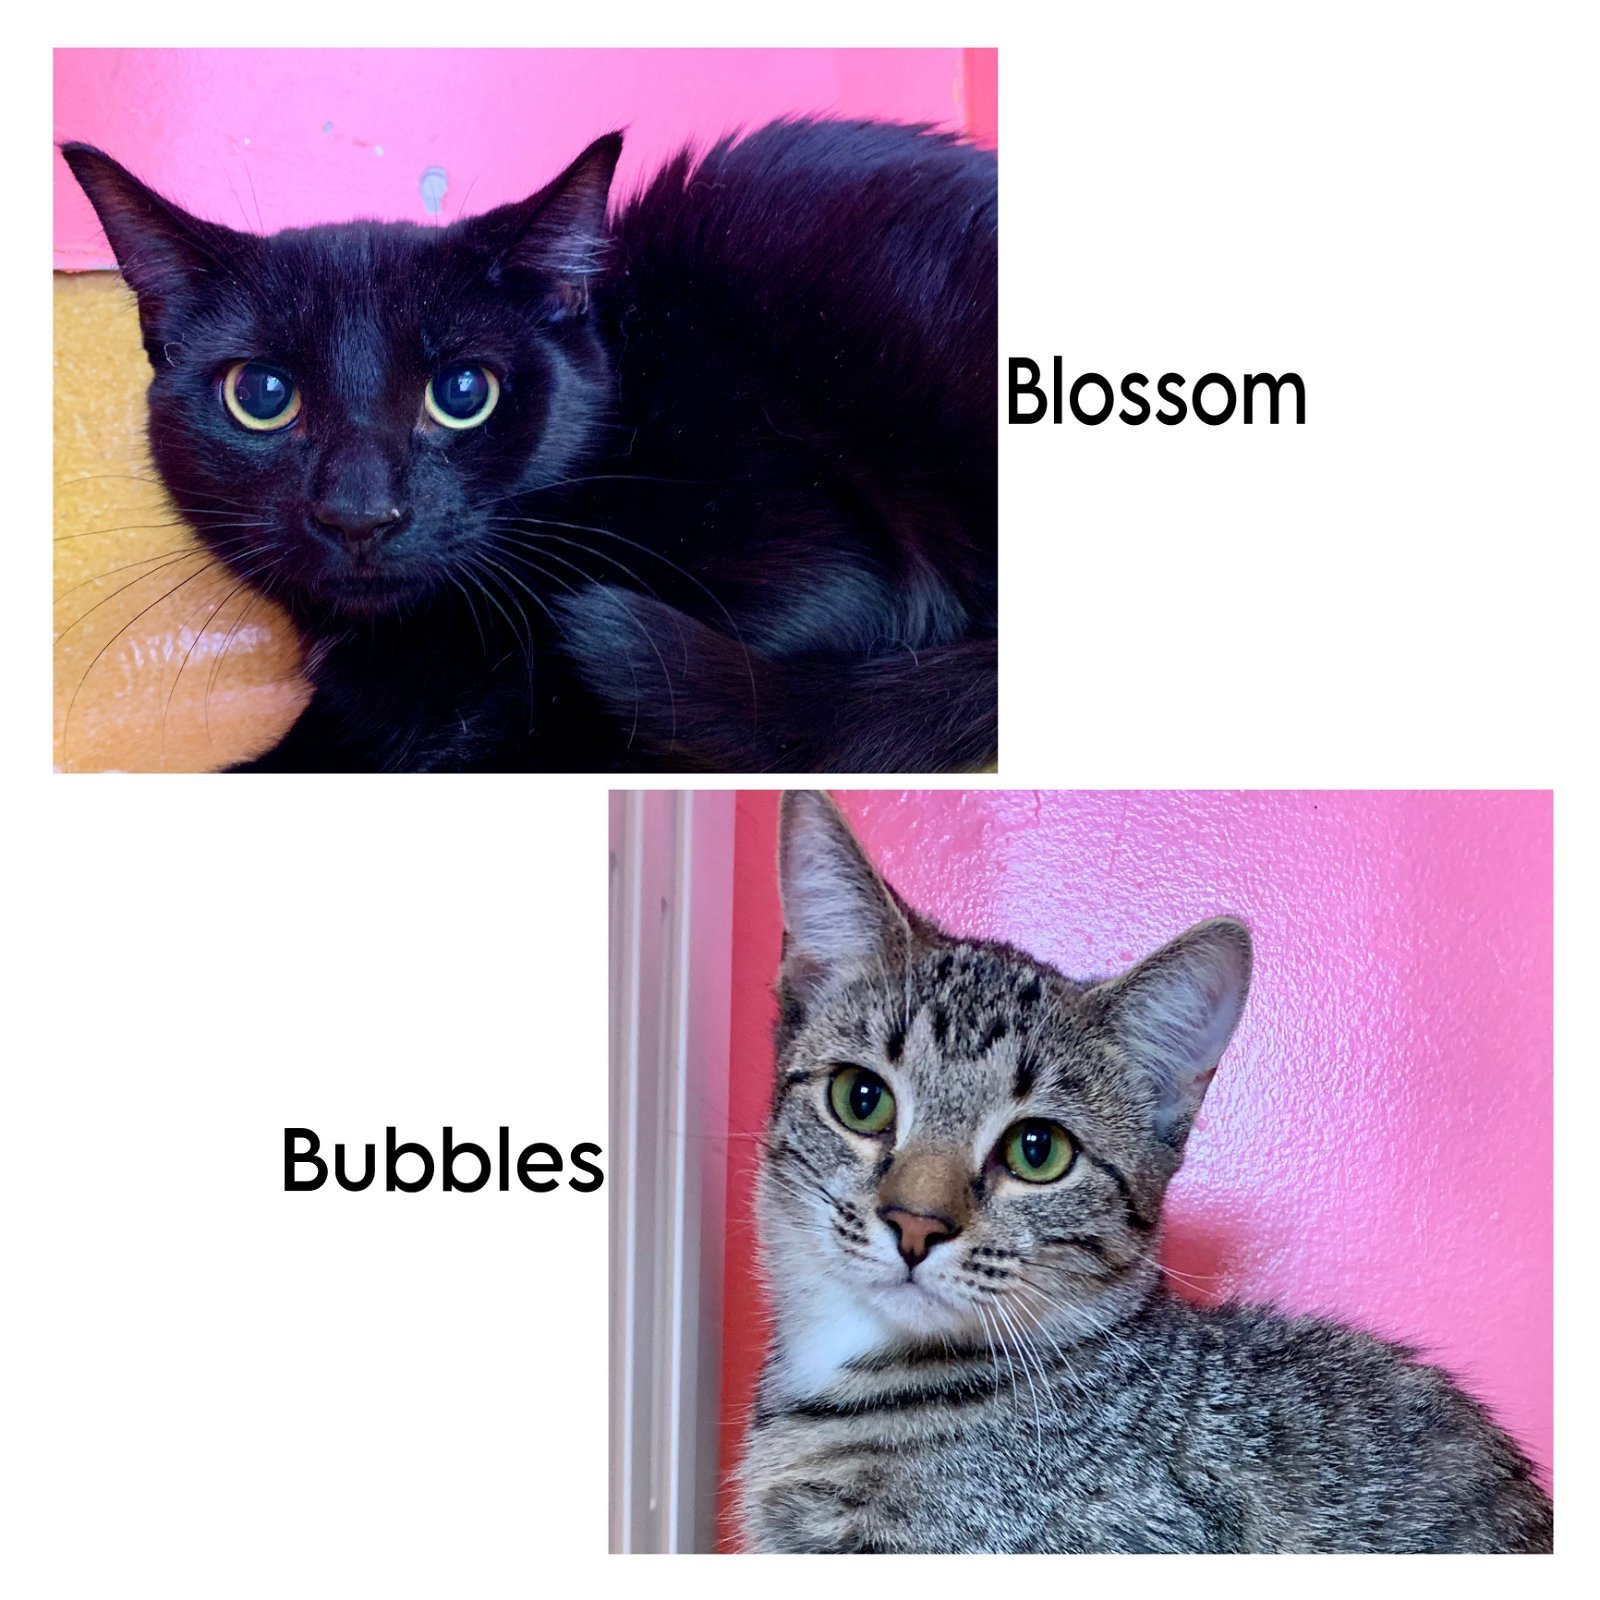 Bubbles & Blossom - BONDED